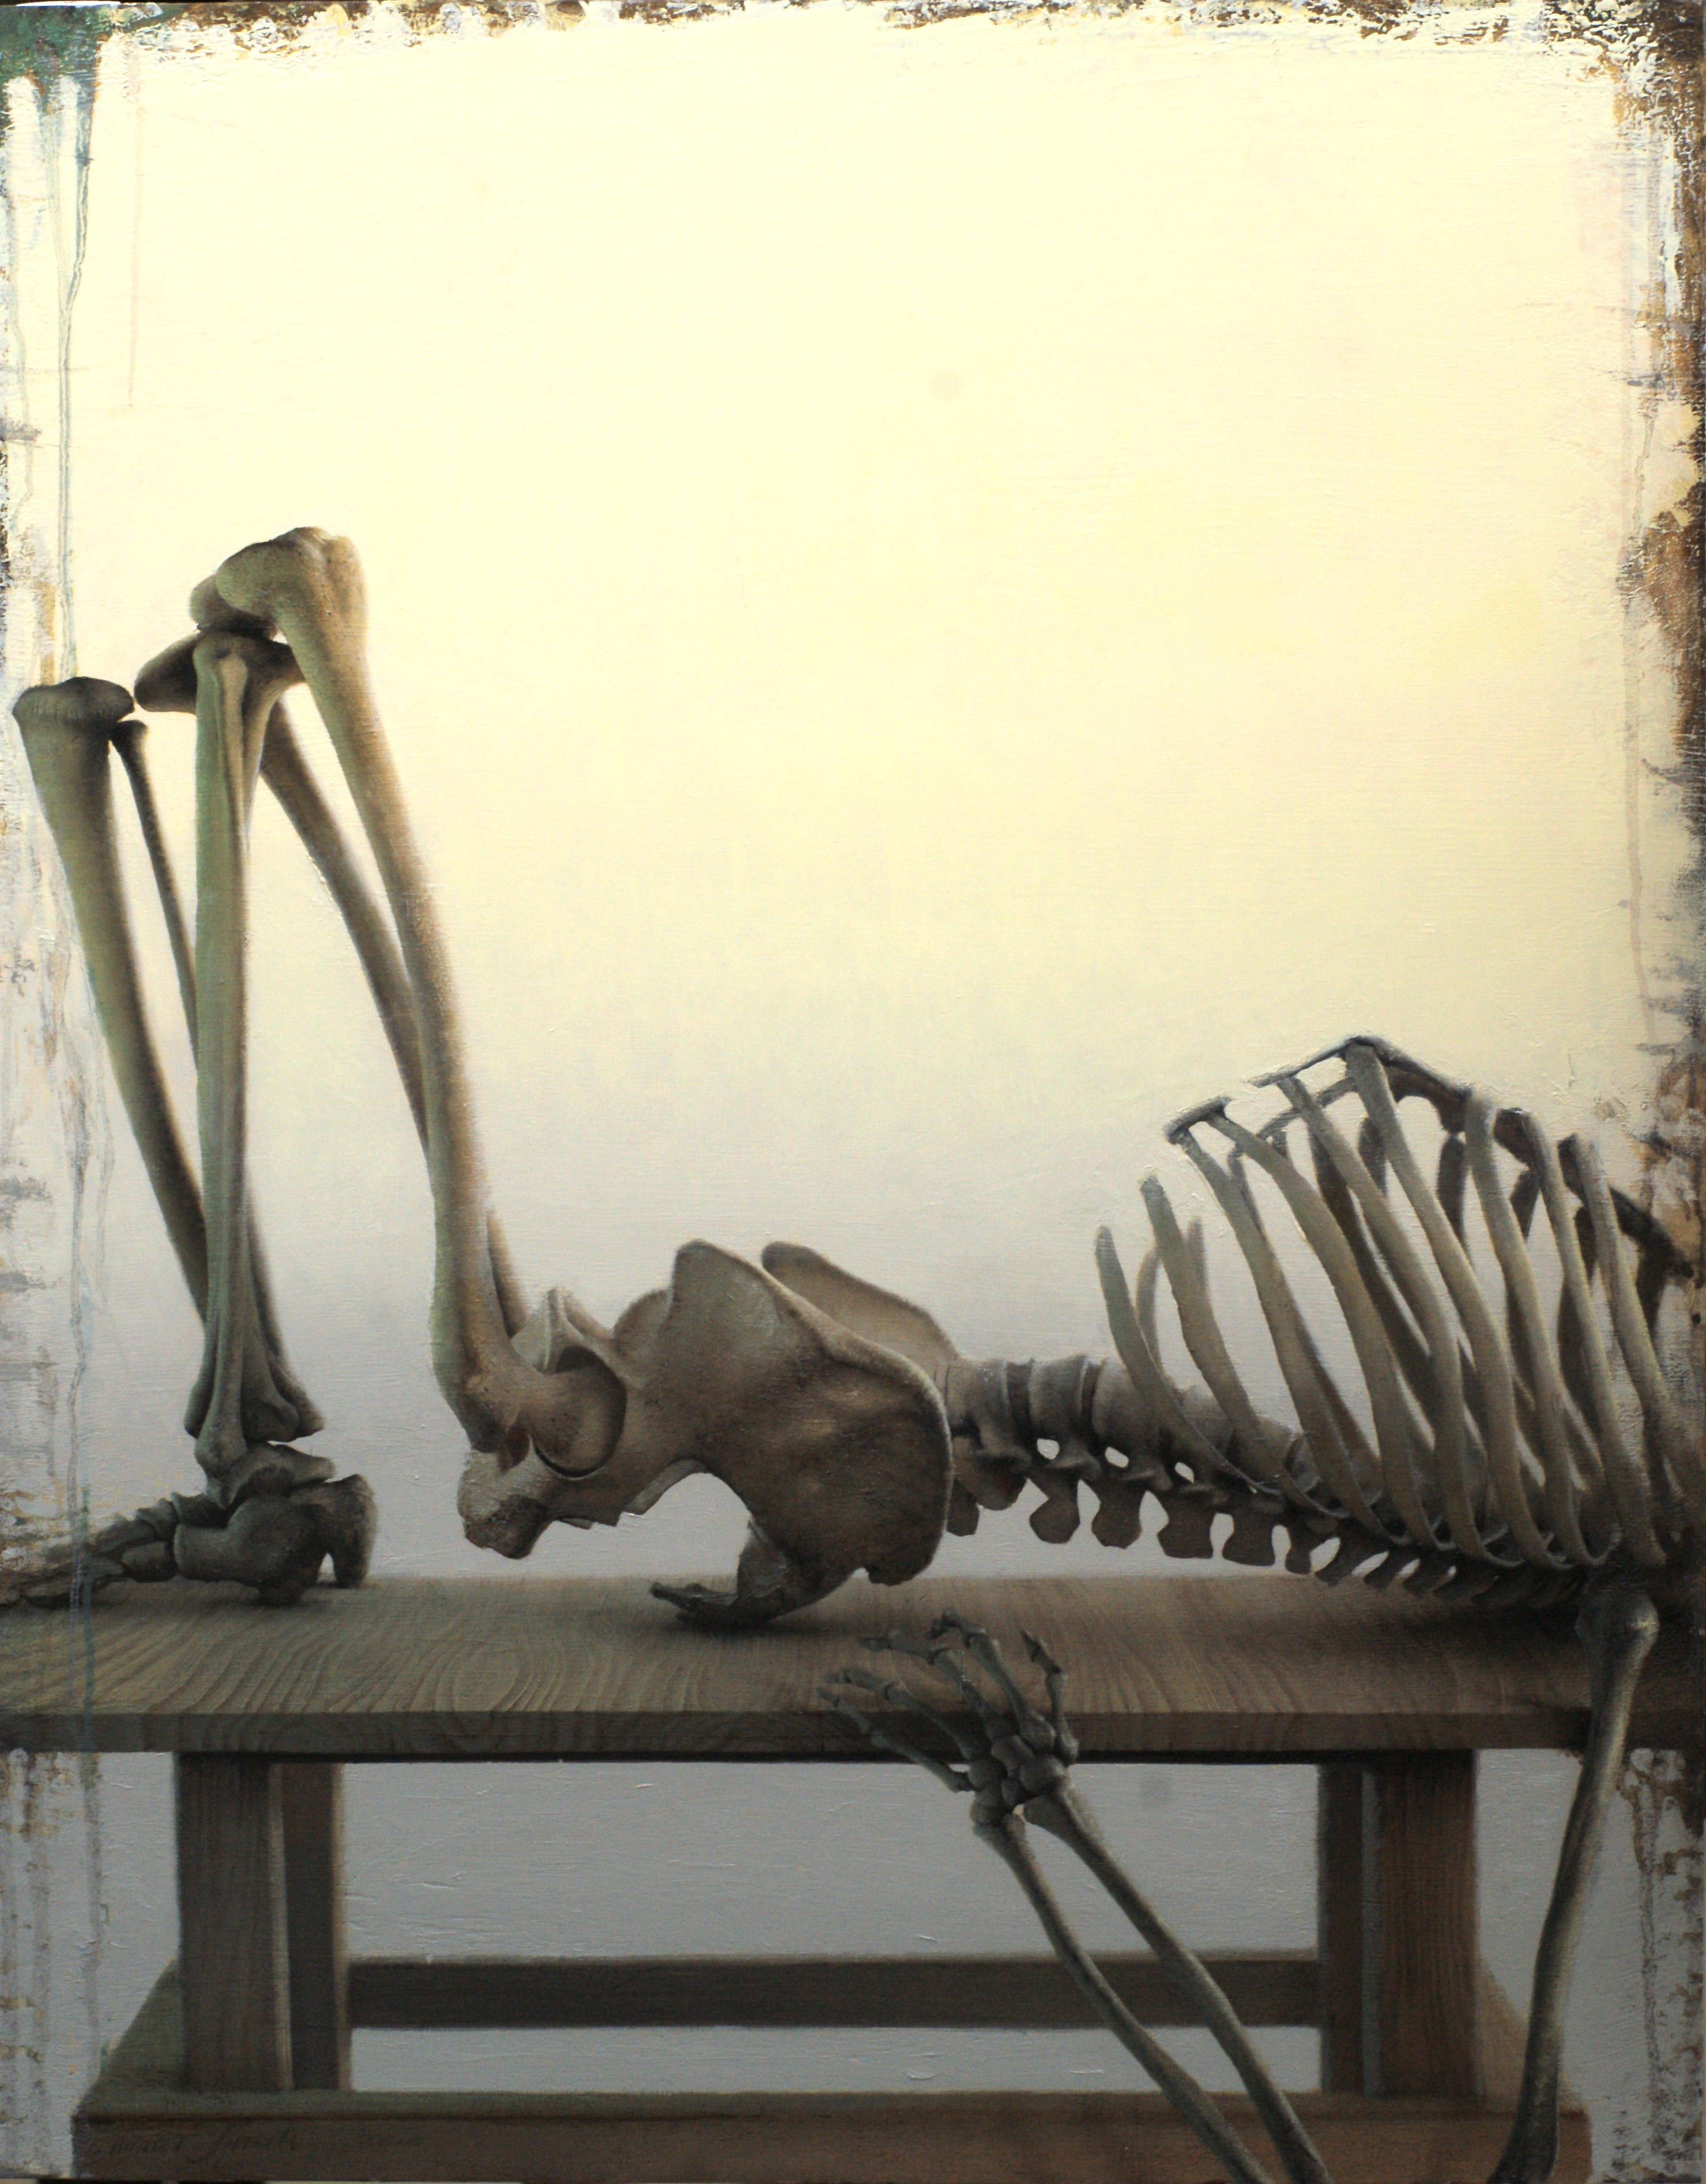 Daniel Sprick, “Skeleton on Table,” oil on panel, 30 x 24 in.